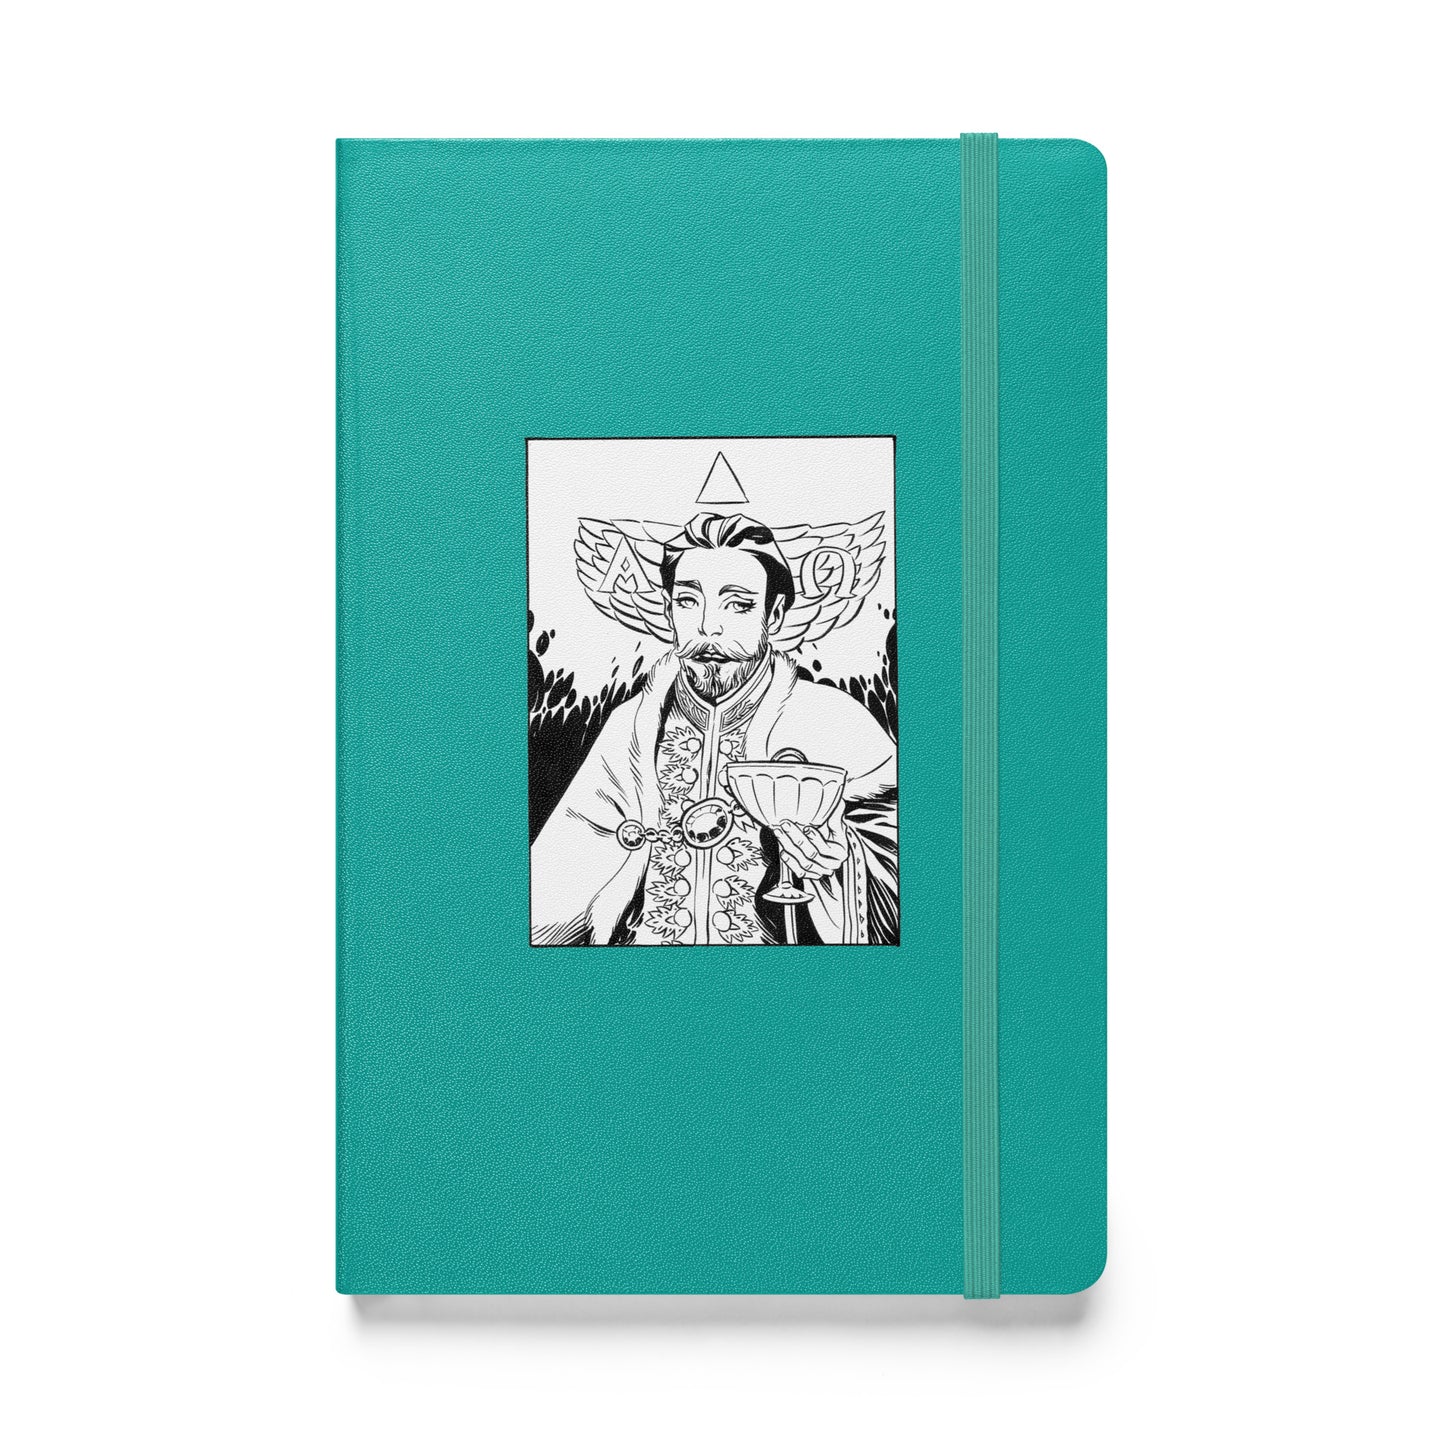 The Alchemist Hardcover Notebook